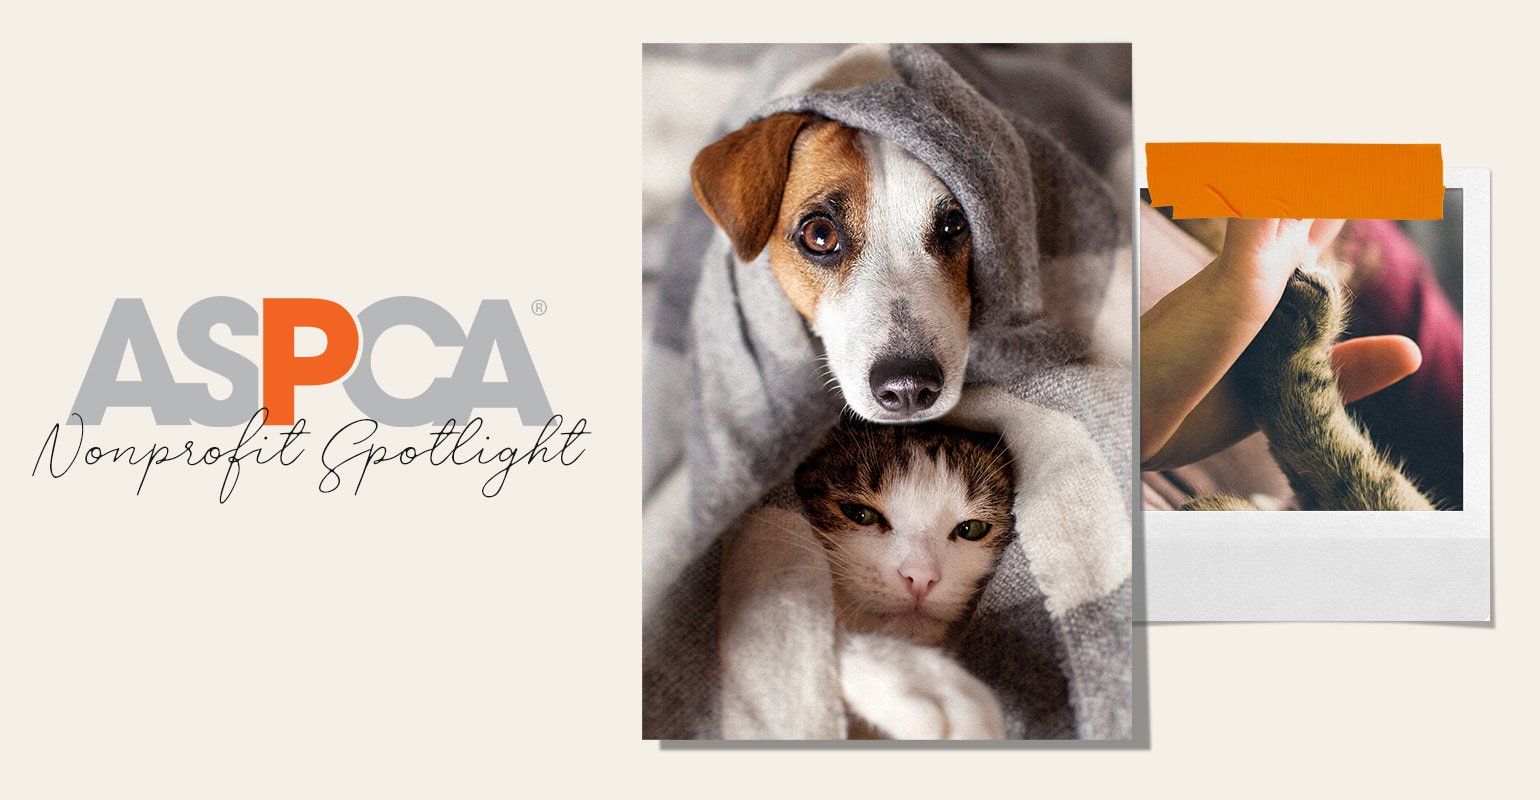 The ASPCA: Nonprofit Spotlight